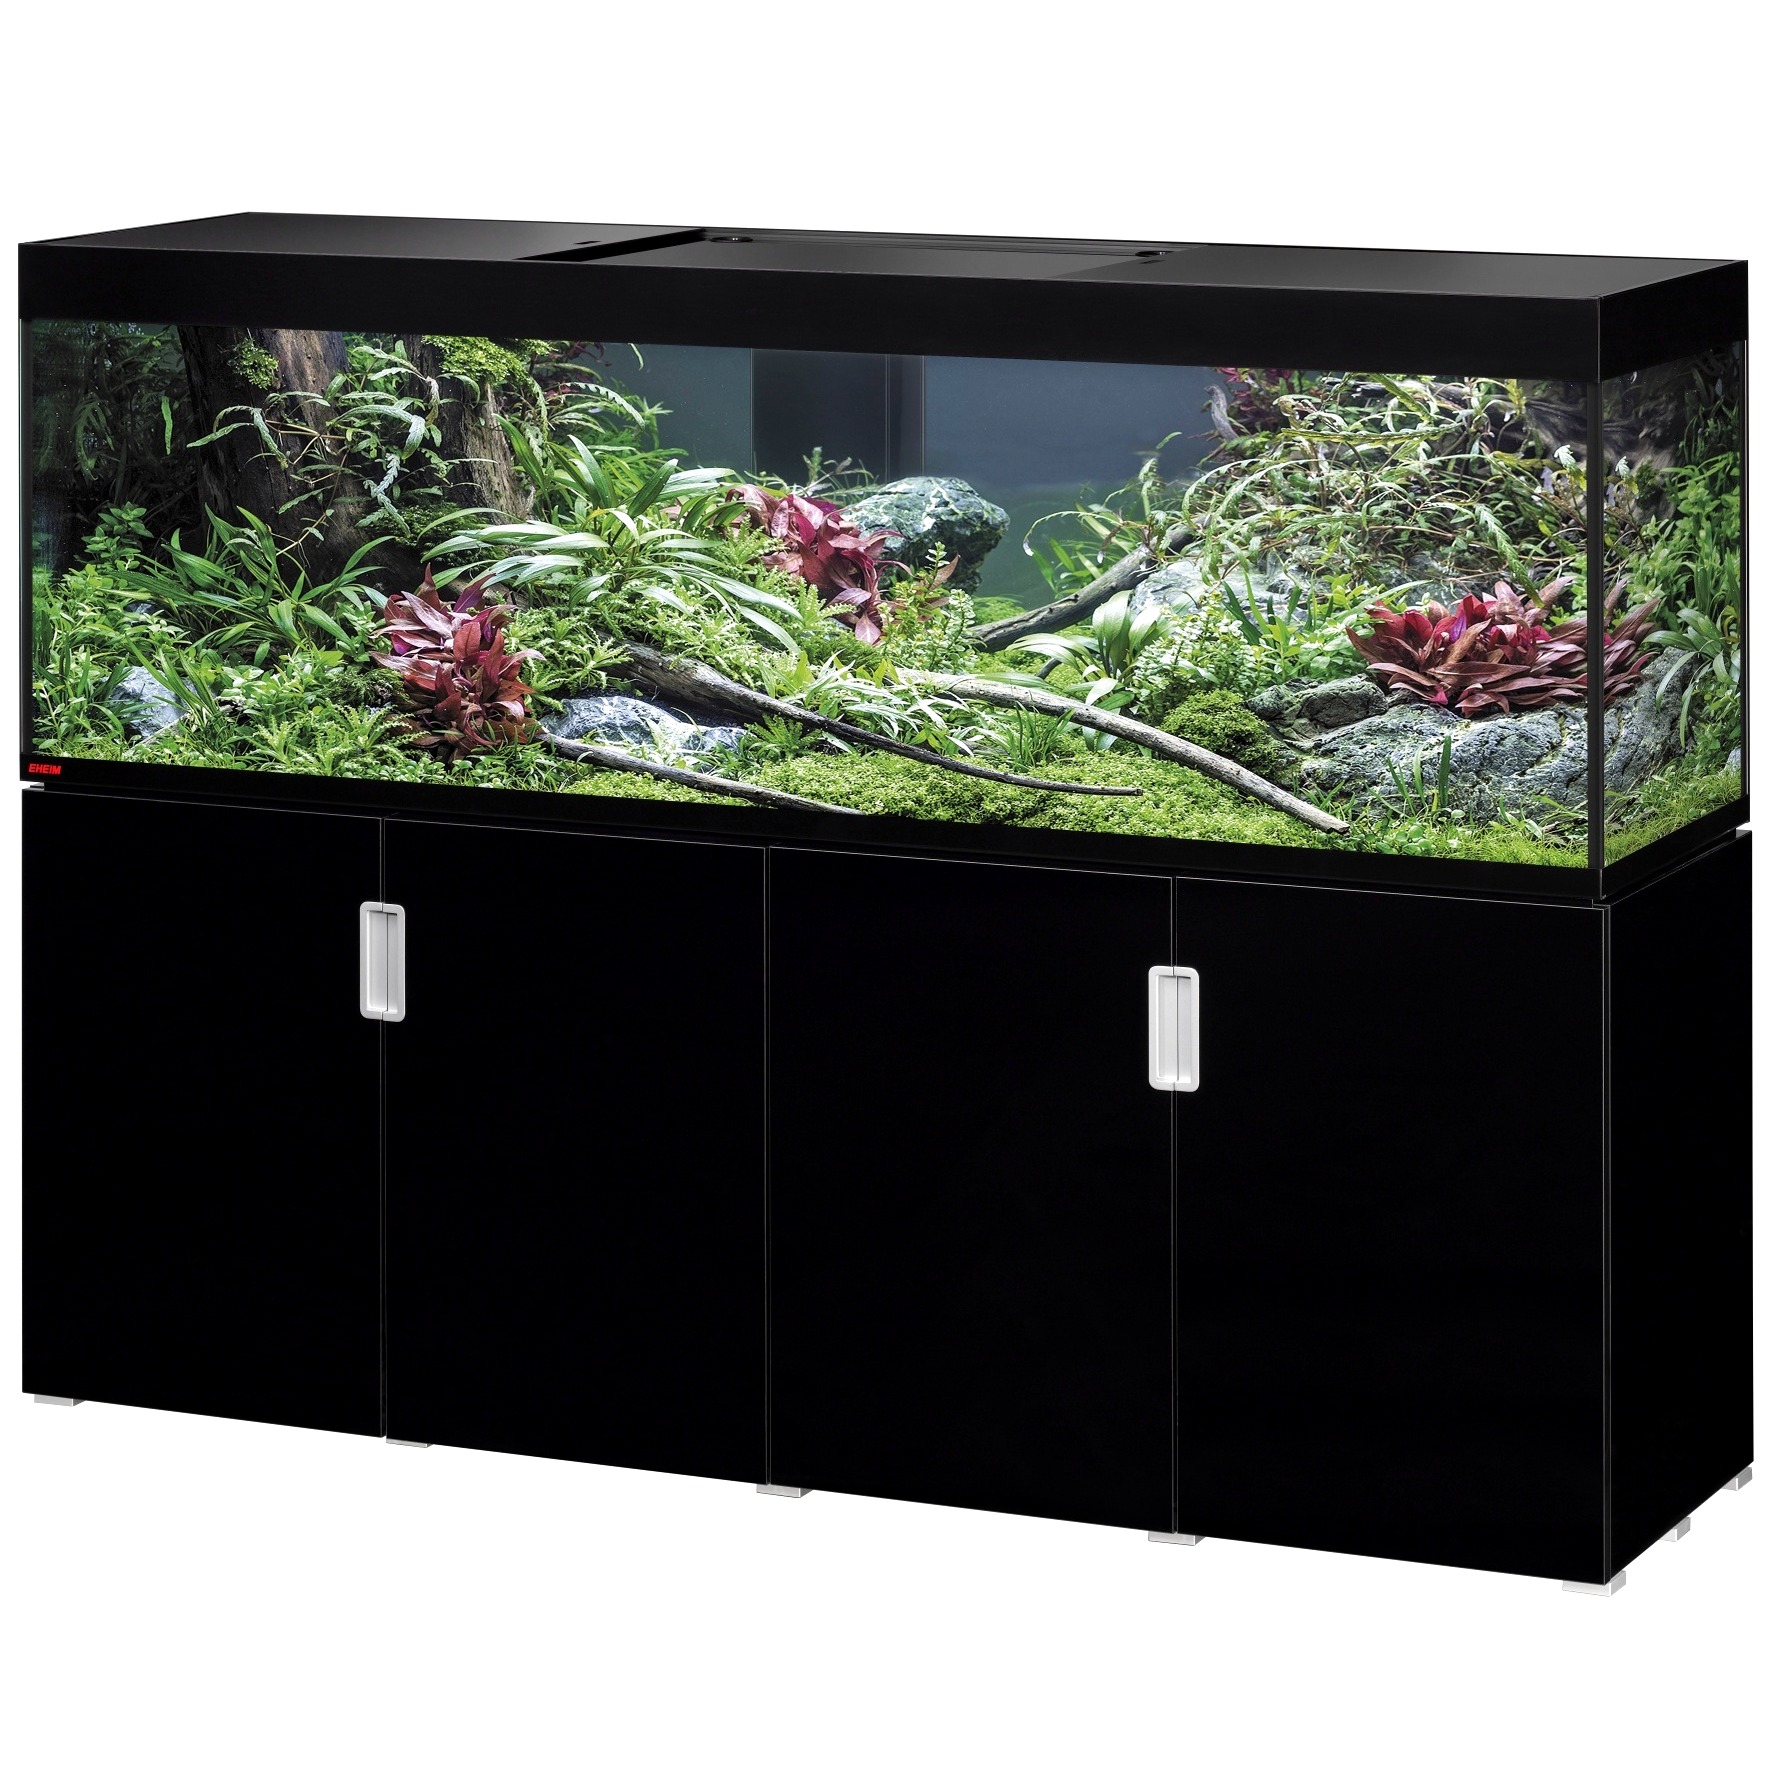 eheim-incpiria-600-led-noir-brillant-kit-aquarium-200-cm-600-l-avec-meuble-et-eclairage-leds